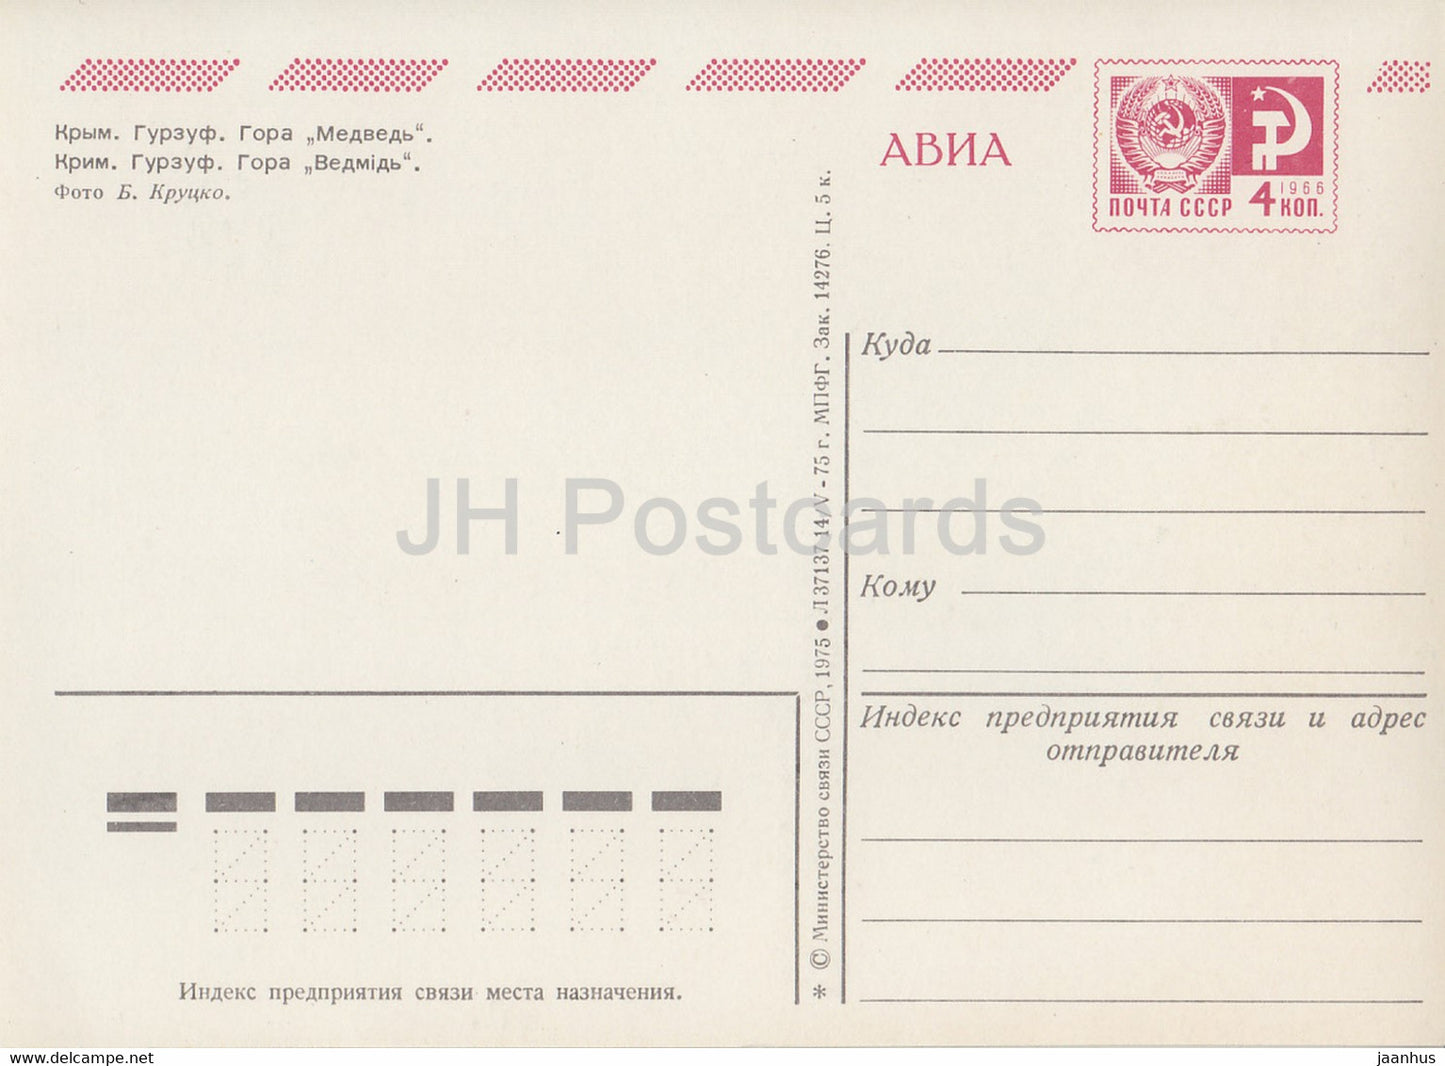 Crimea - Gurzuf - Medved (Bear) mountain - AVIA - postal stationery - 1975 - Ukraine USSR - unused